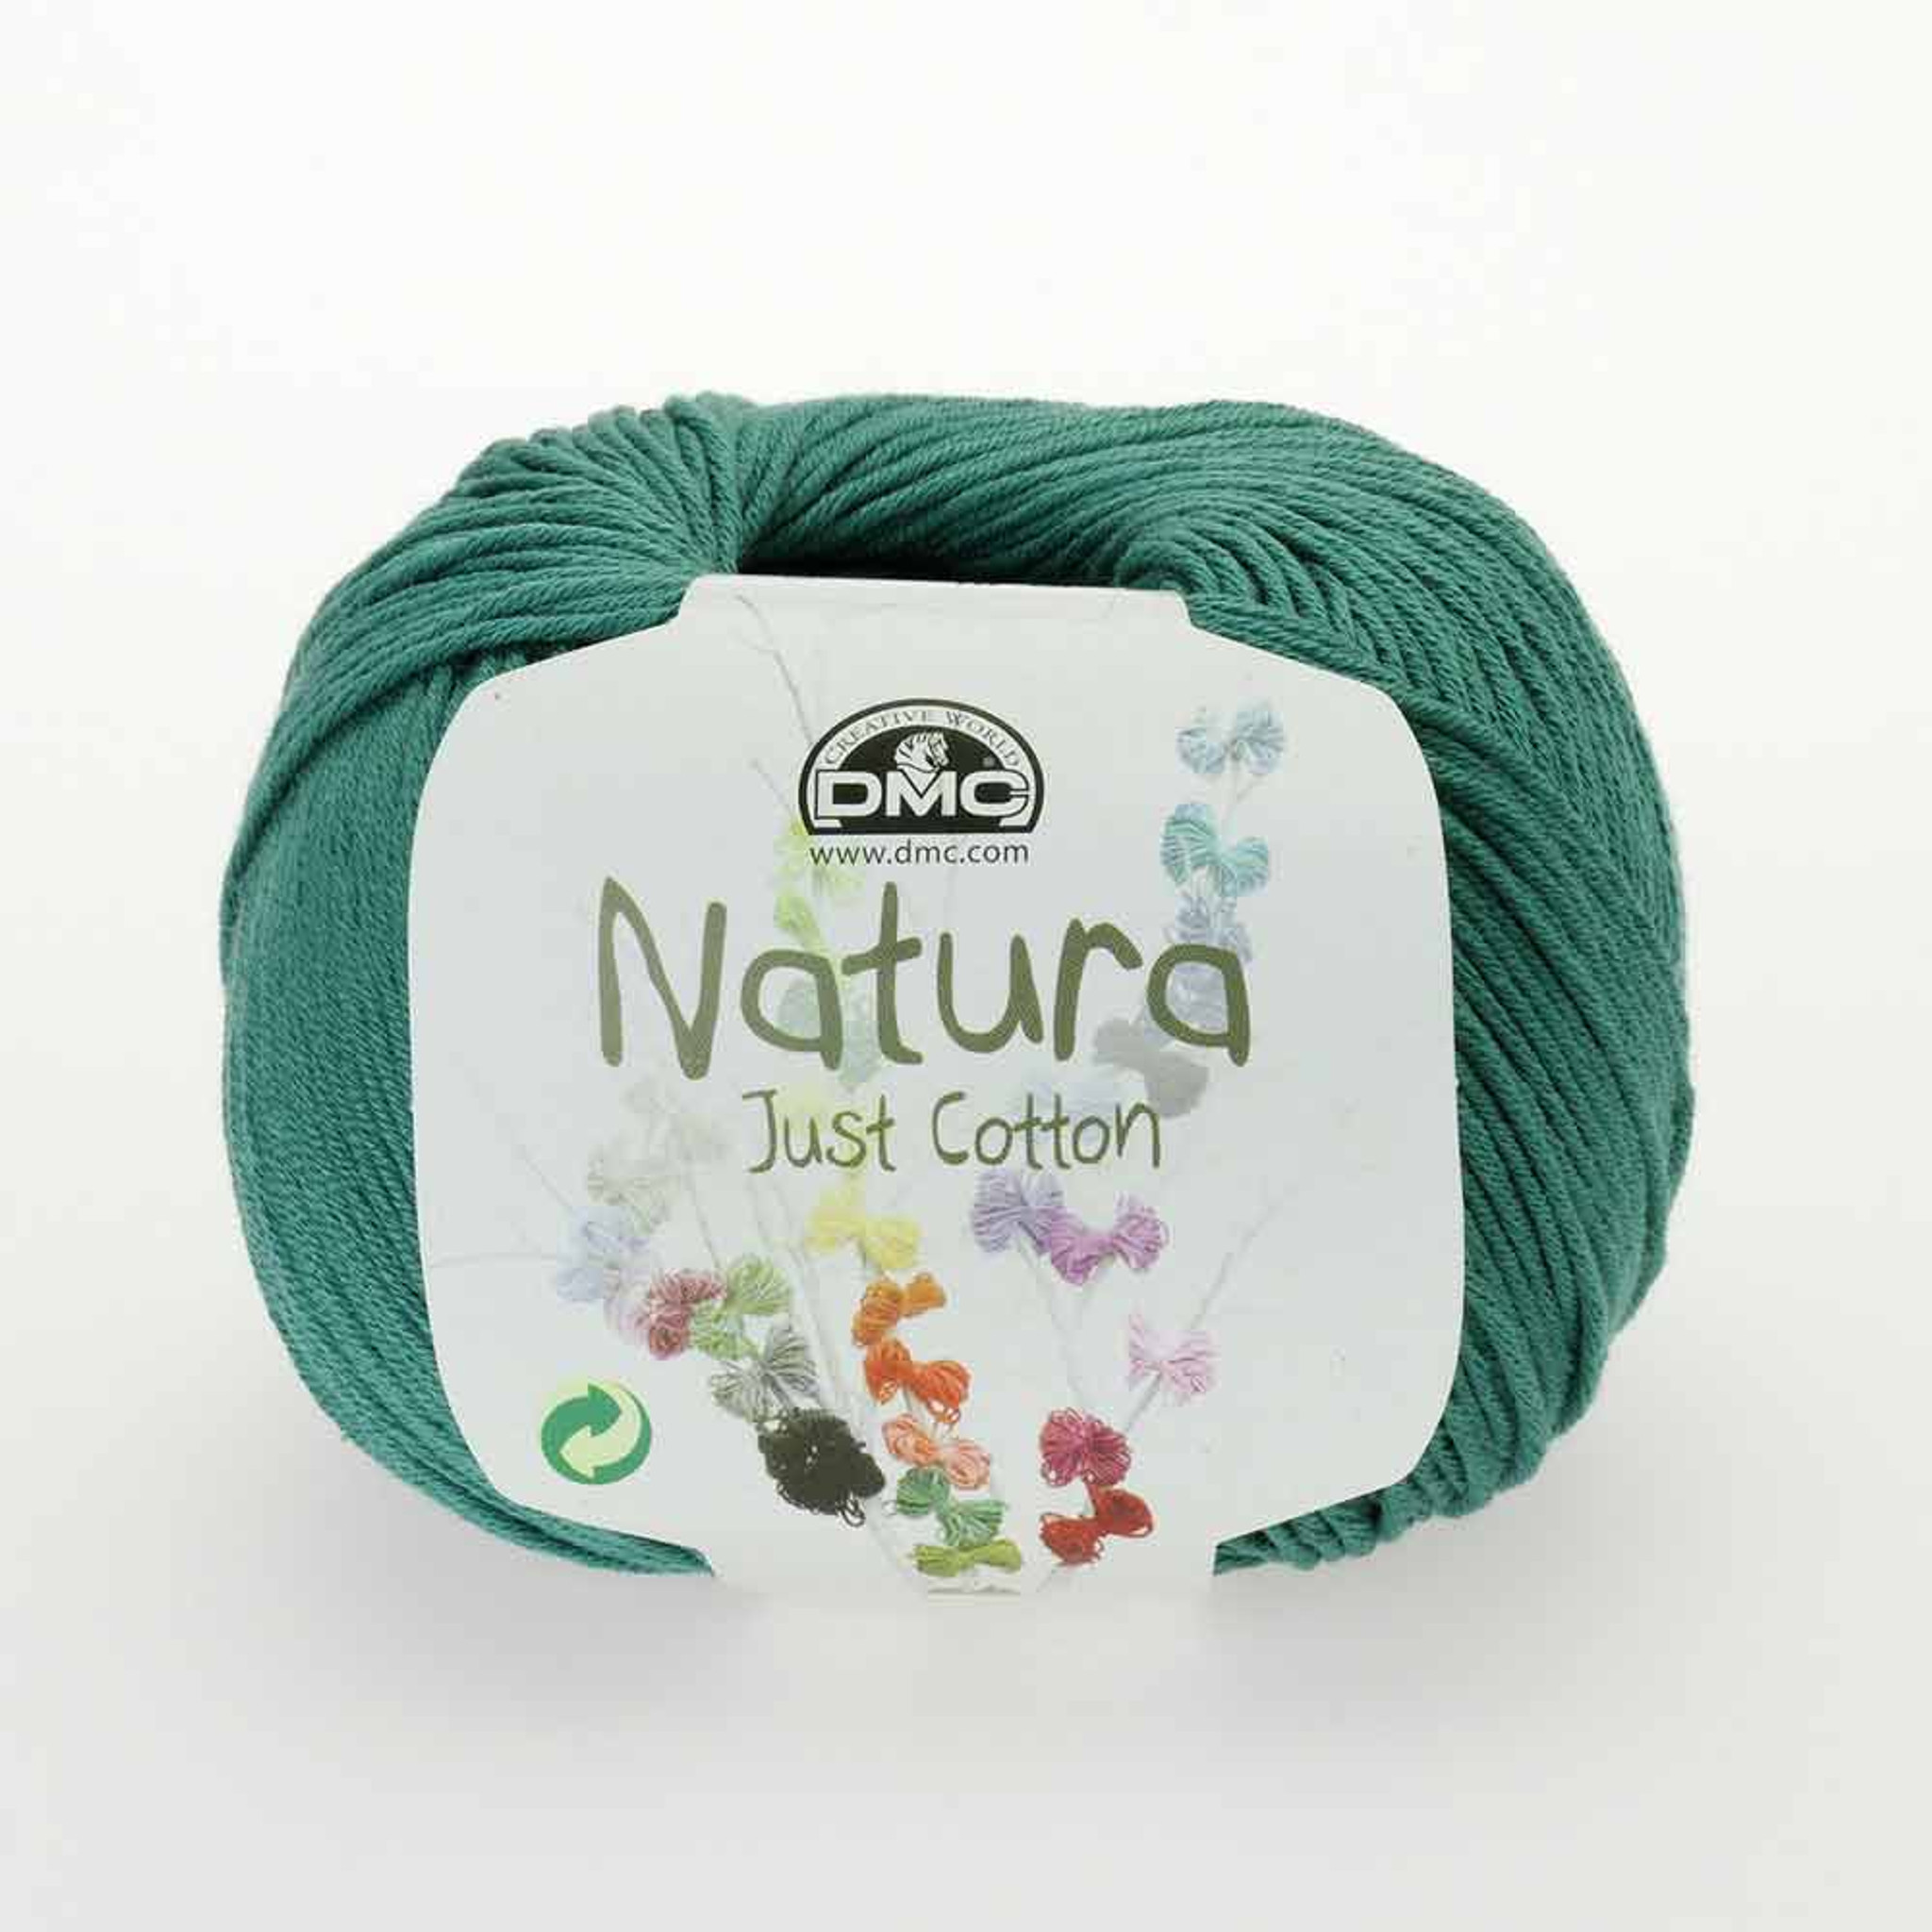 DMC Natura Just Cotton Crochet Cotton 4 Ply, 50g Balls